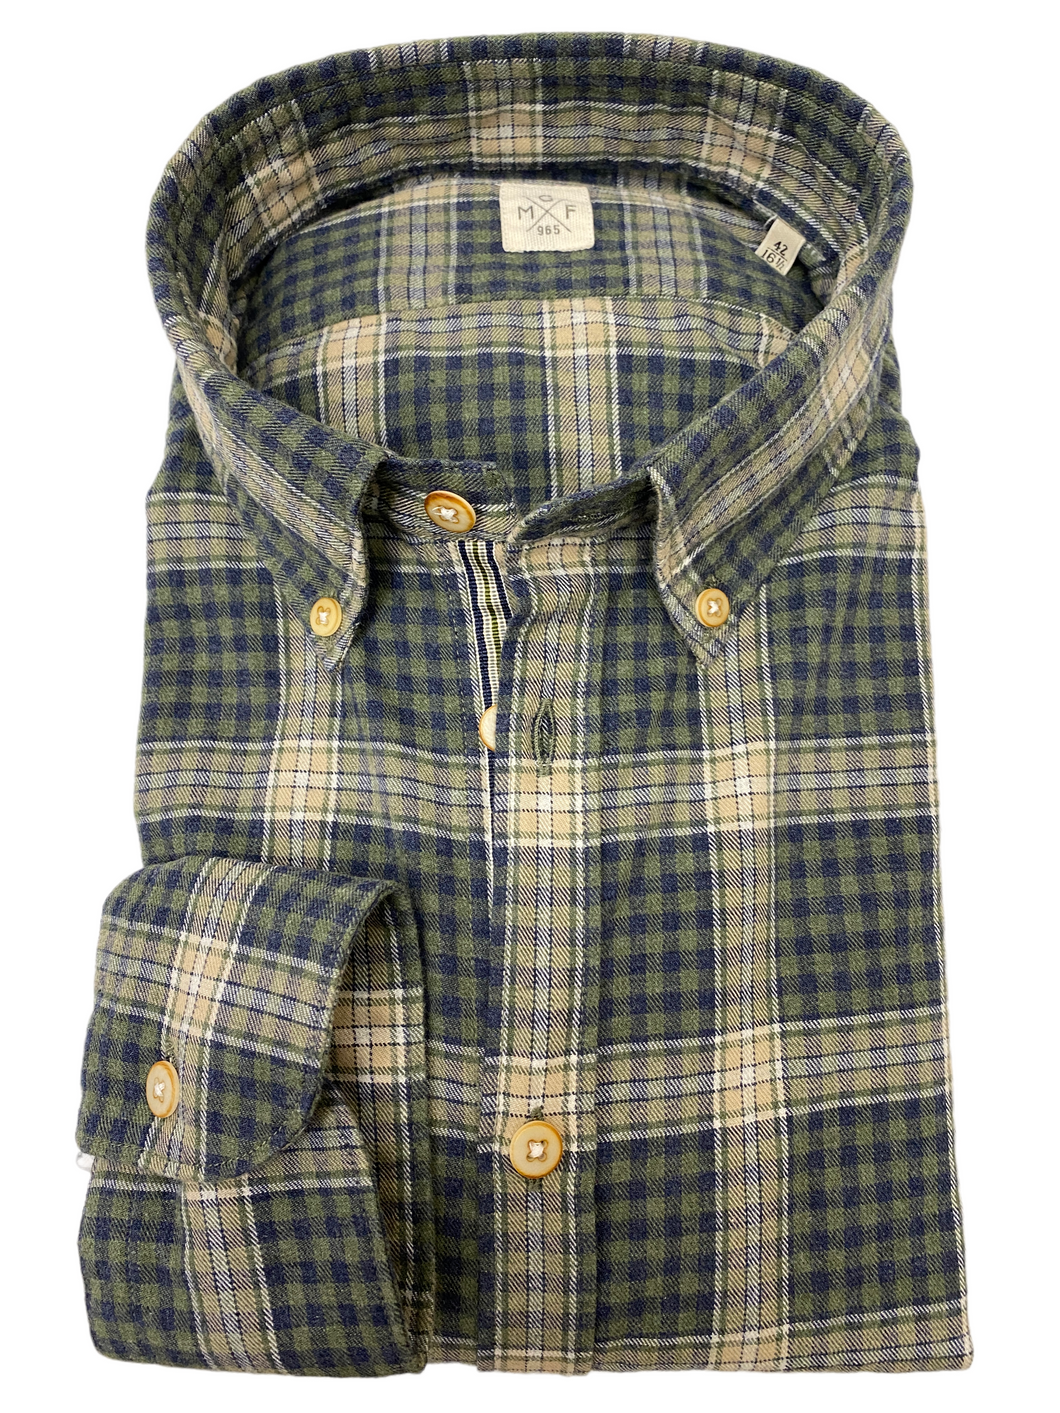 GMF Cotton Flannel Shirt Navy/Green Plaid